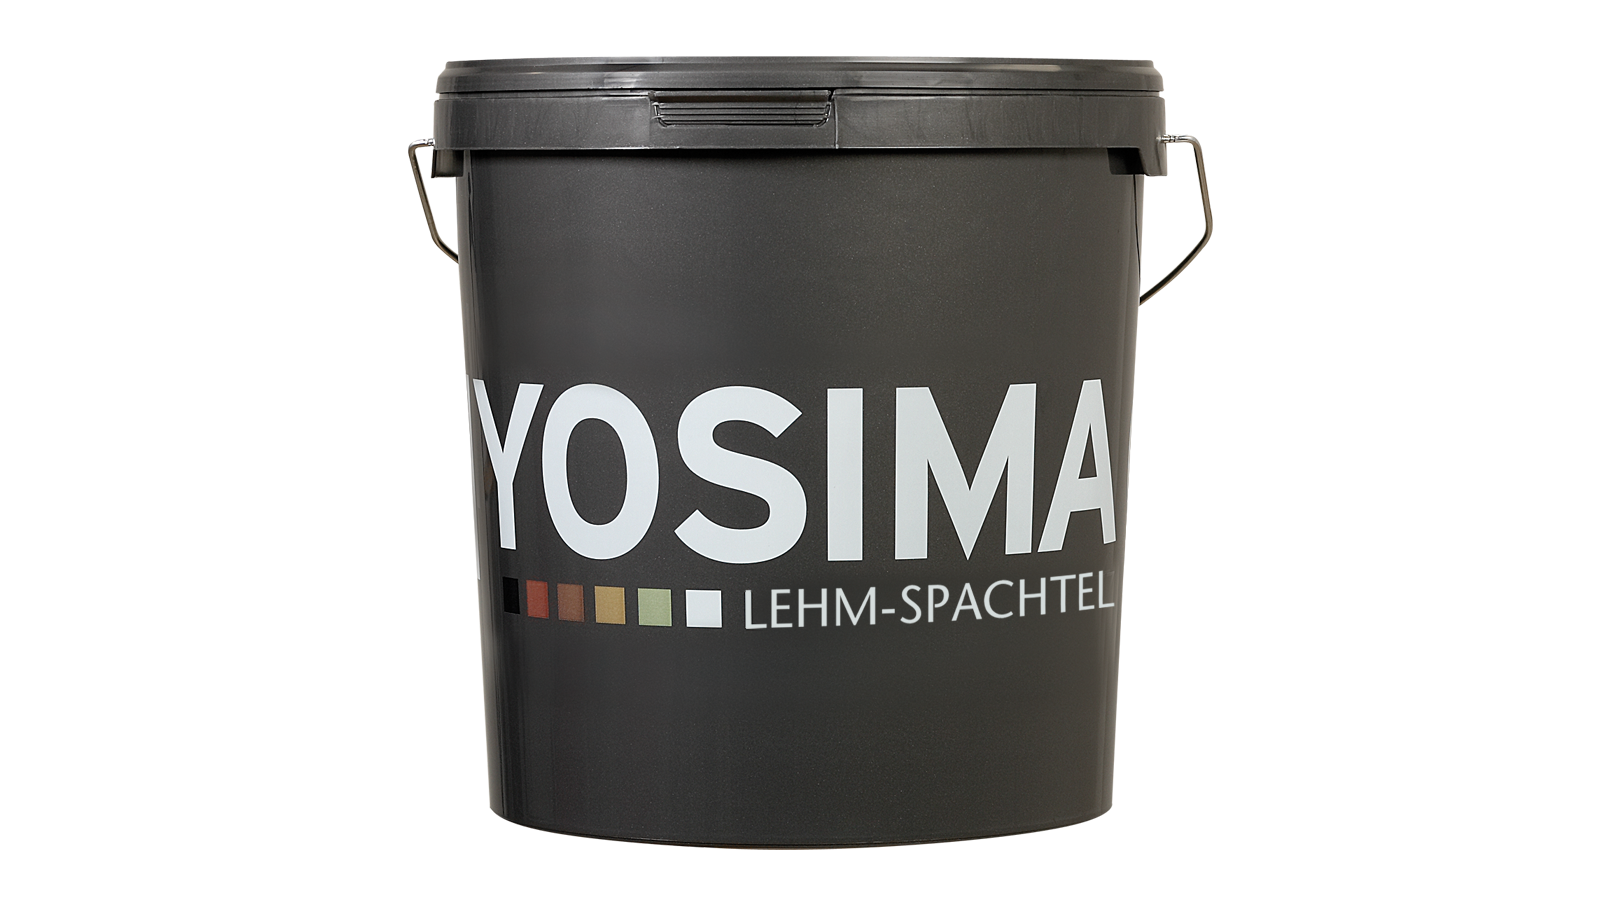 YOSIMA Lehm-Farbspachtel Grundfarbtöne